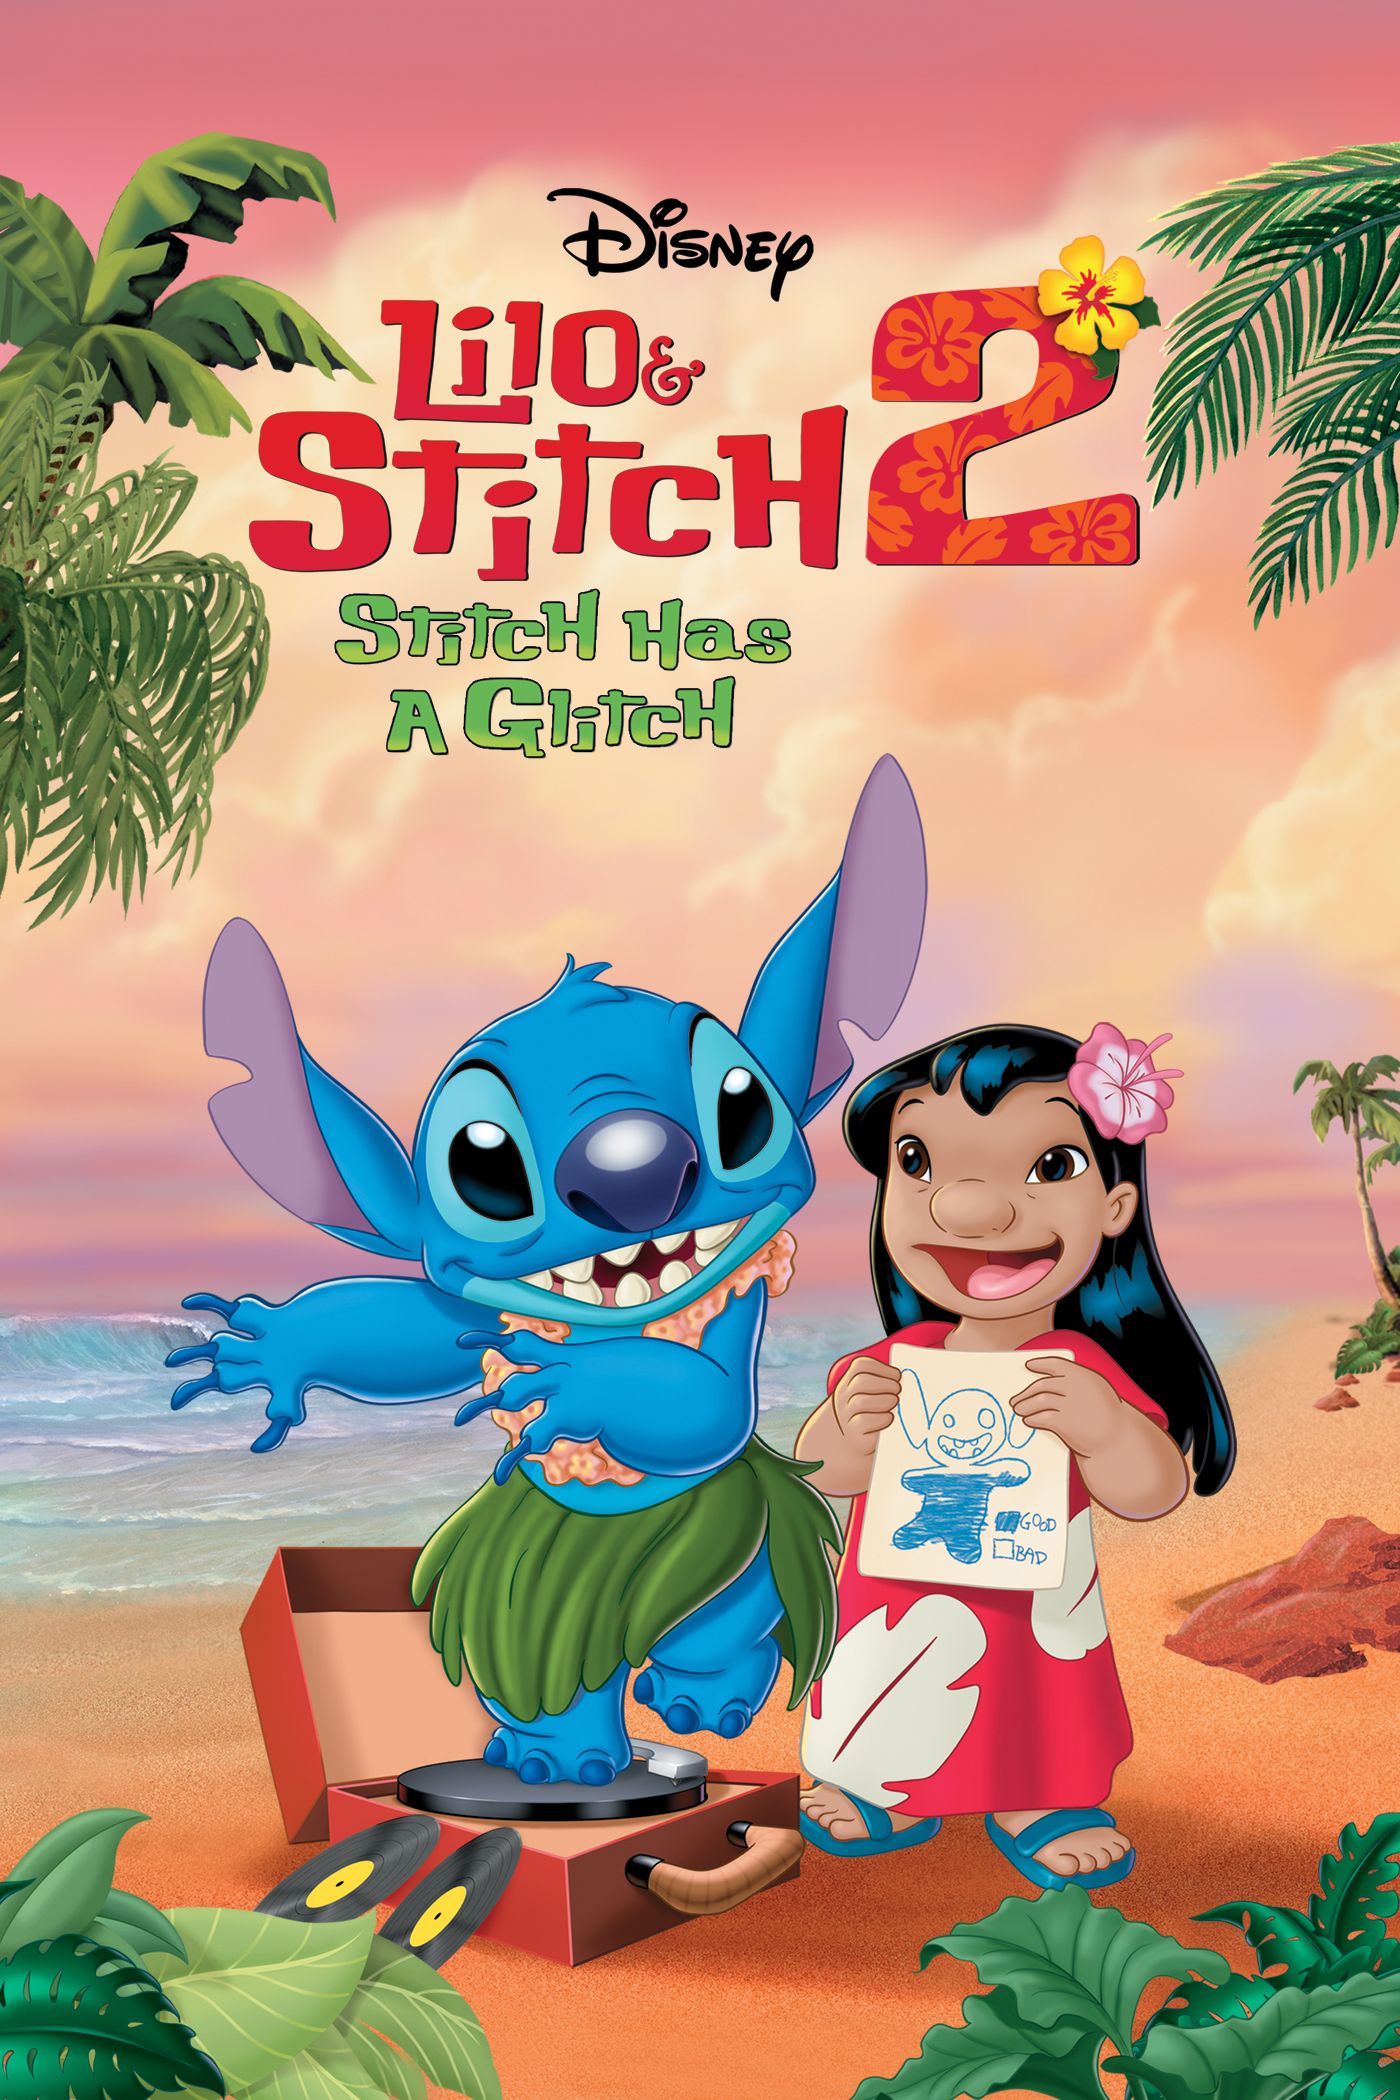 Lilo & Stitch, Full Movie